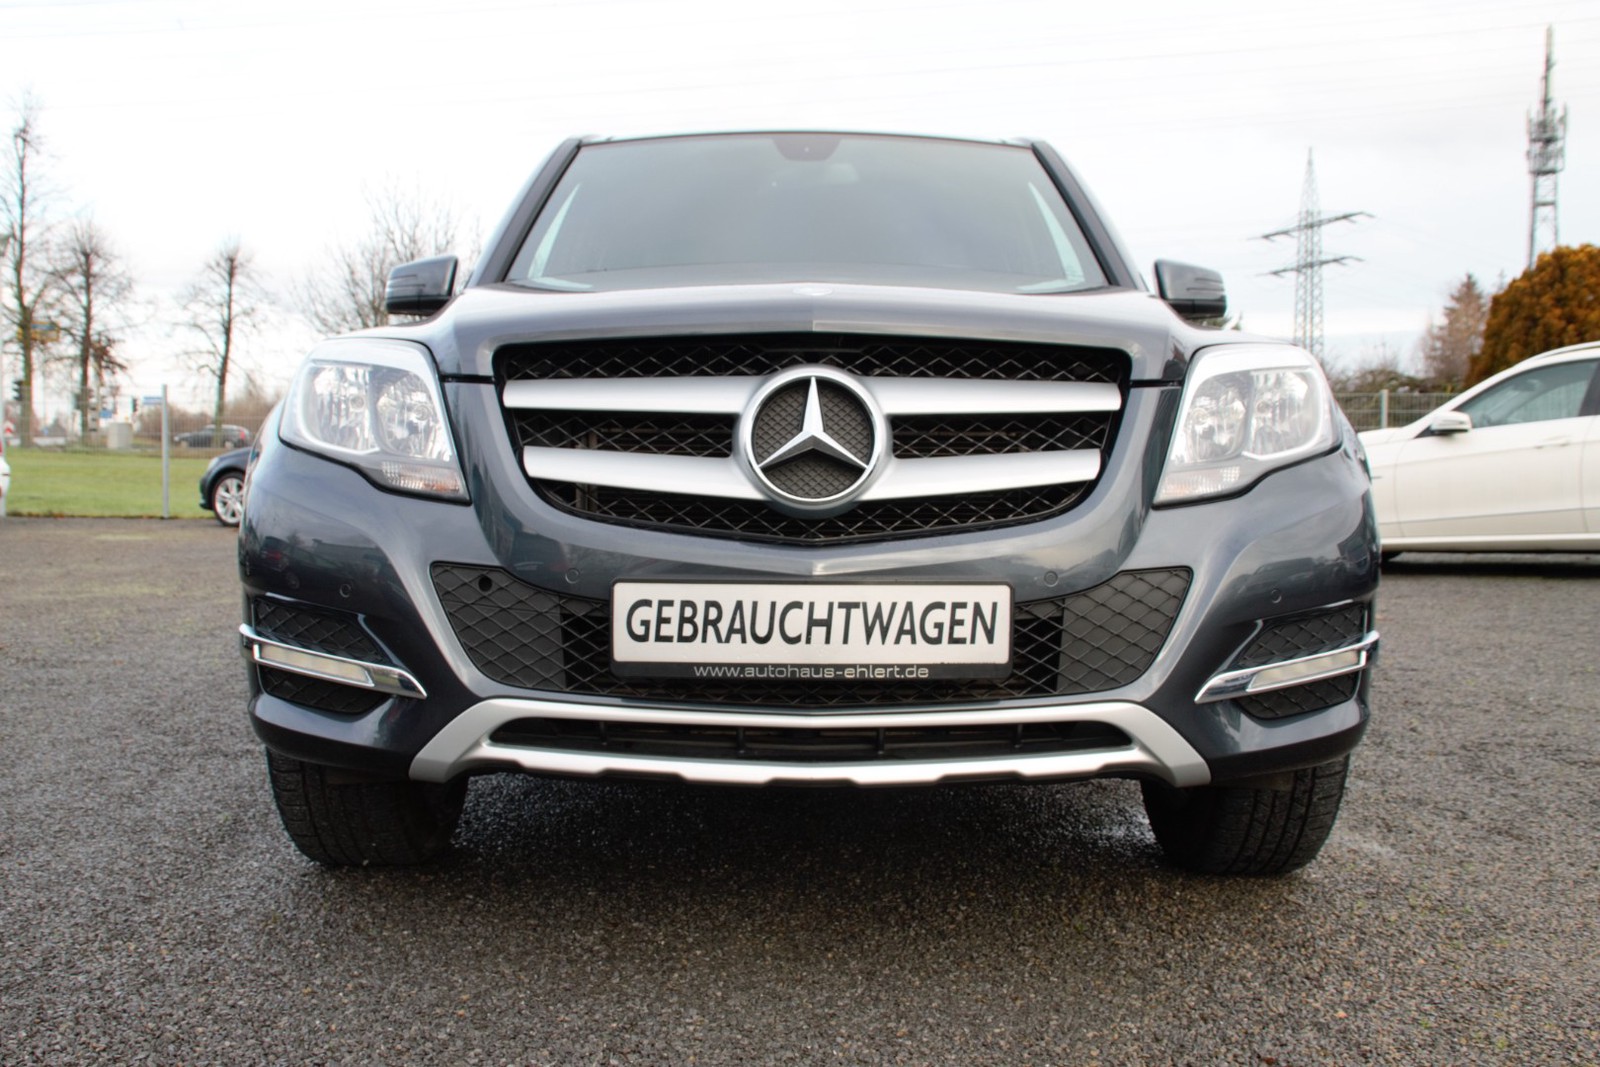 Mercedes Benz Glk 2 Cdi 4 Matic Be Gebraucht Kaufen In Ettlingen Bei Karlsruhe Preis 950 Eur Int Nr Gj